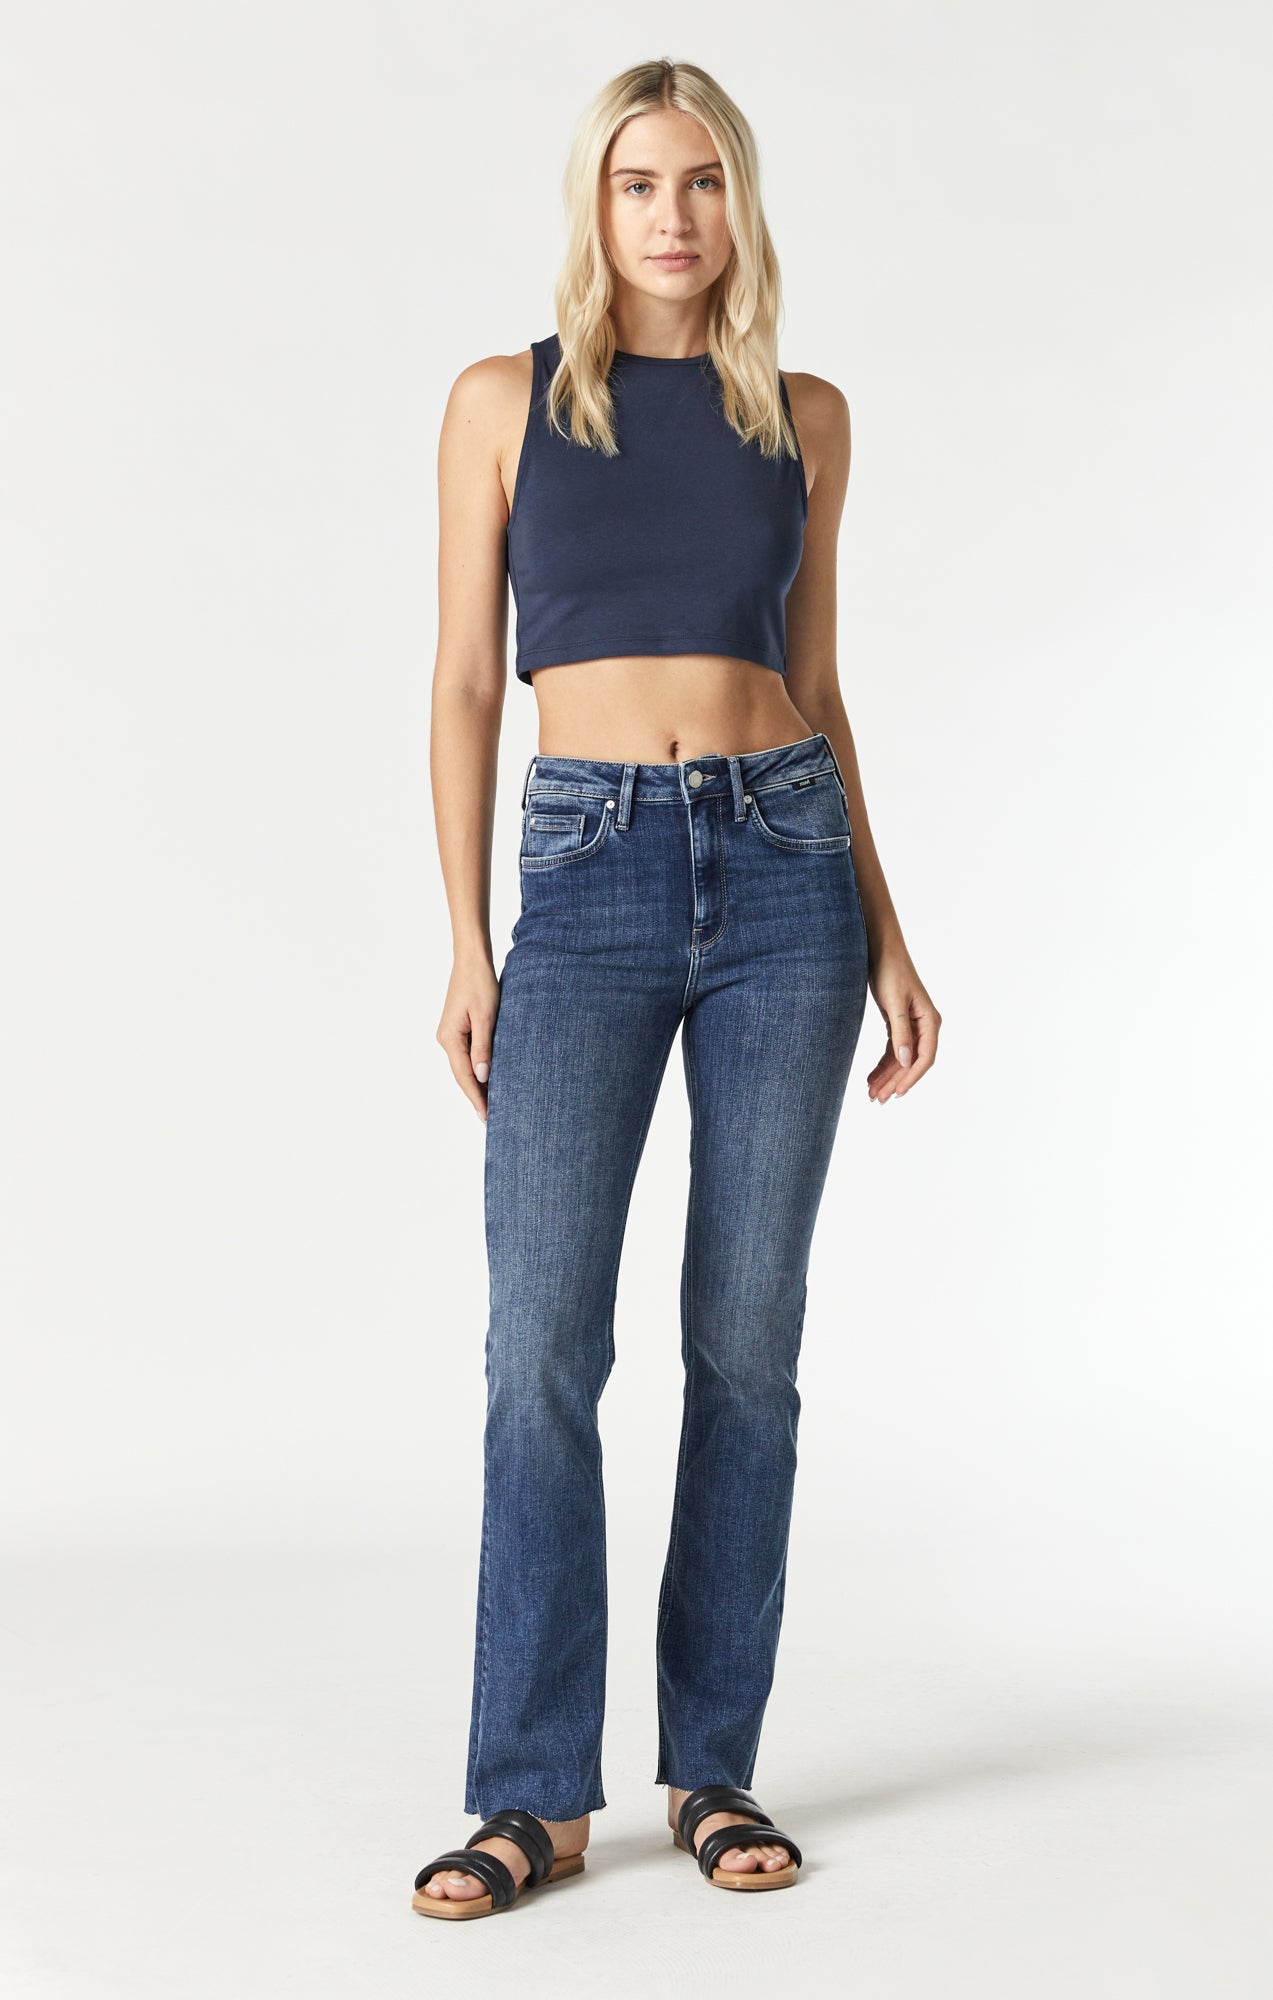 J Brand Jeans Womens Leggings 901VO241 Mojave Waxed 6198 RN#117965 - Size 25